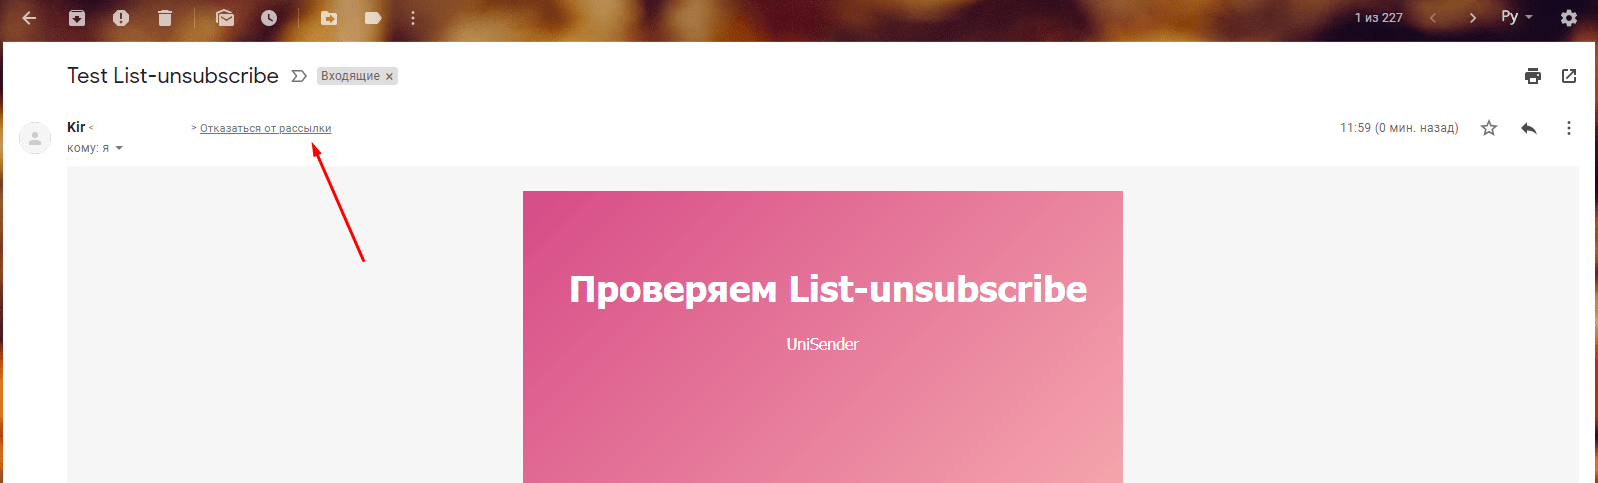 List-unsubscribe в Gmail